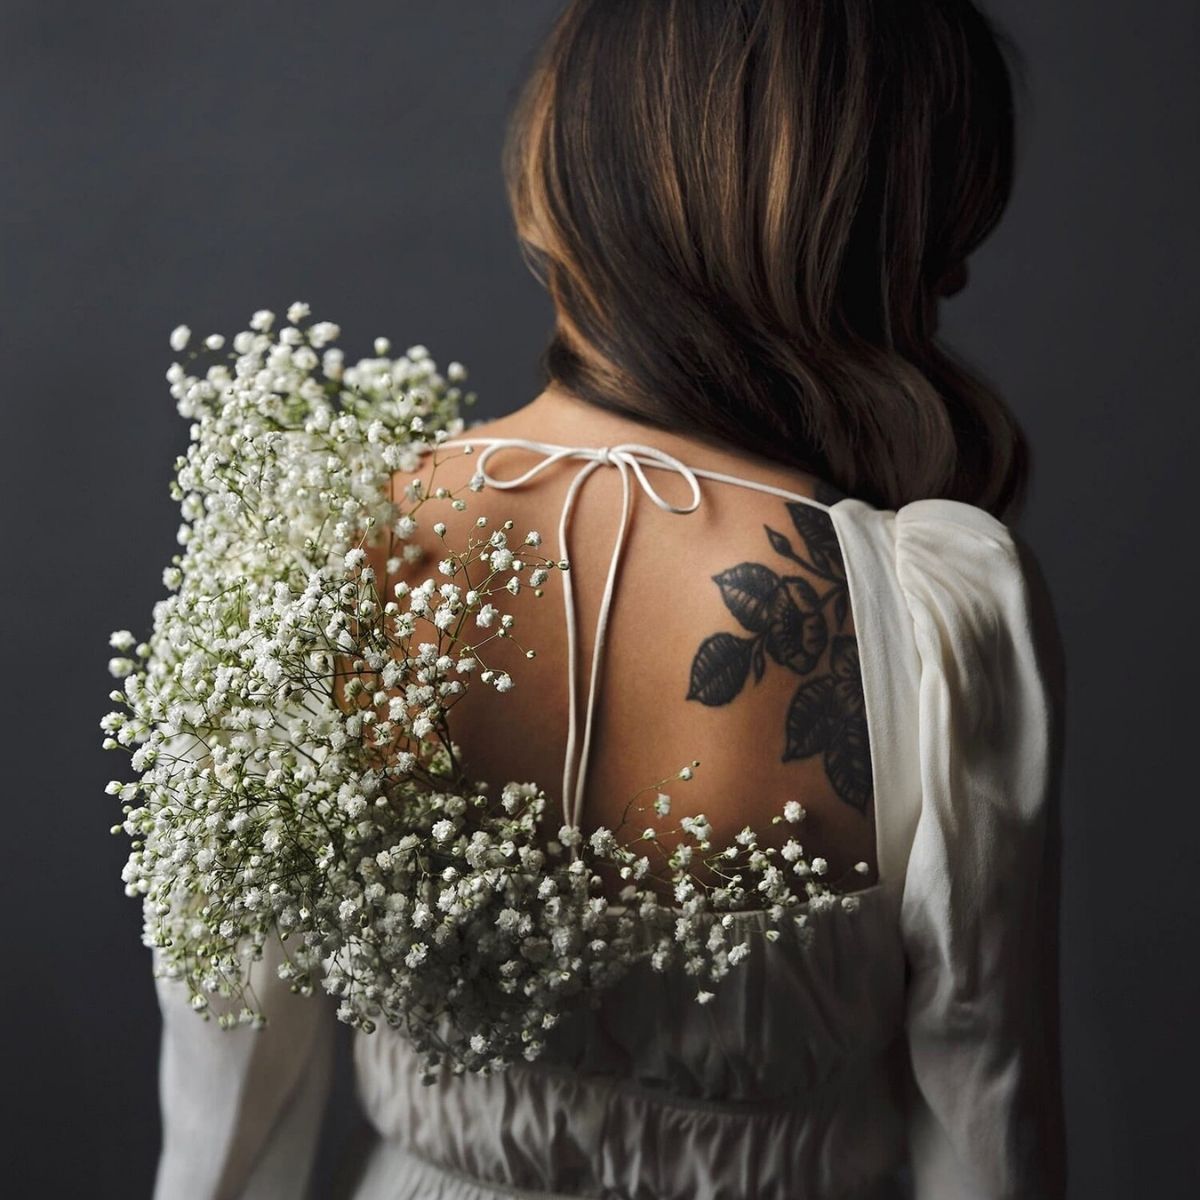 Rachel Clark on ThursdRachel Clark With Her Beautiful Tattoo and Flowers 